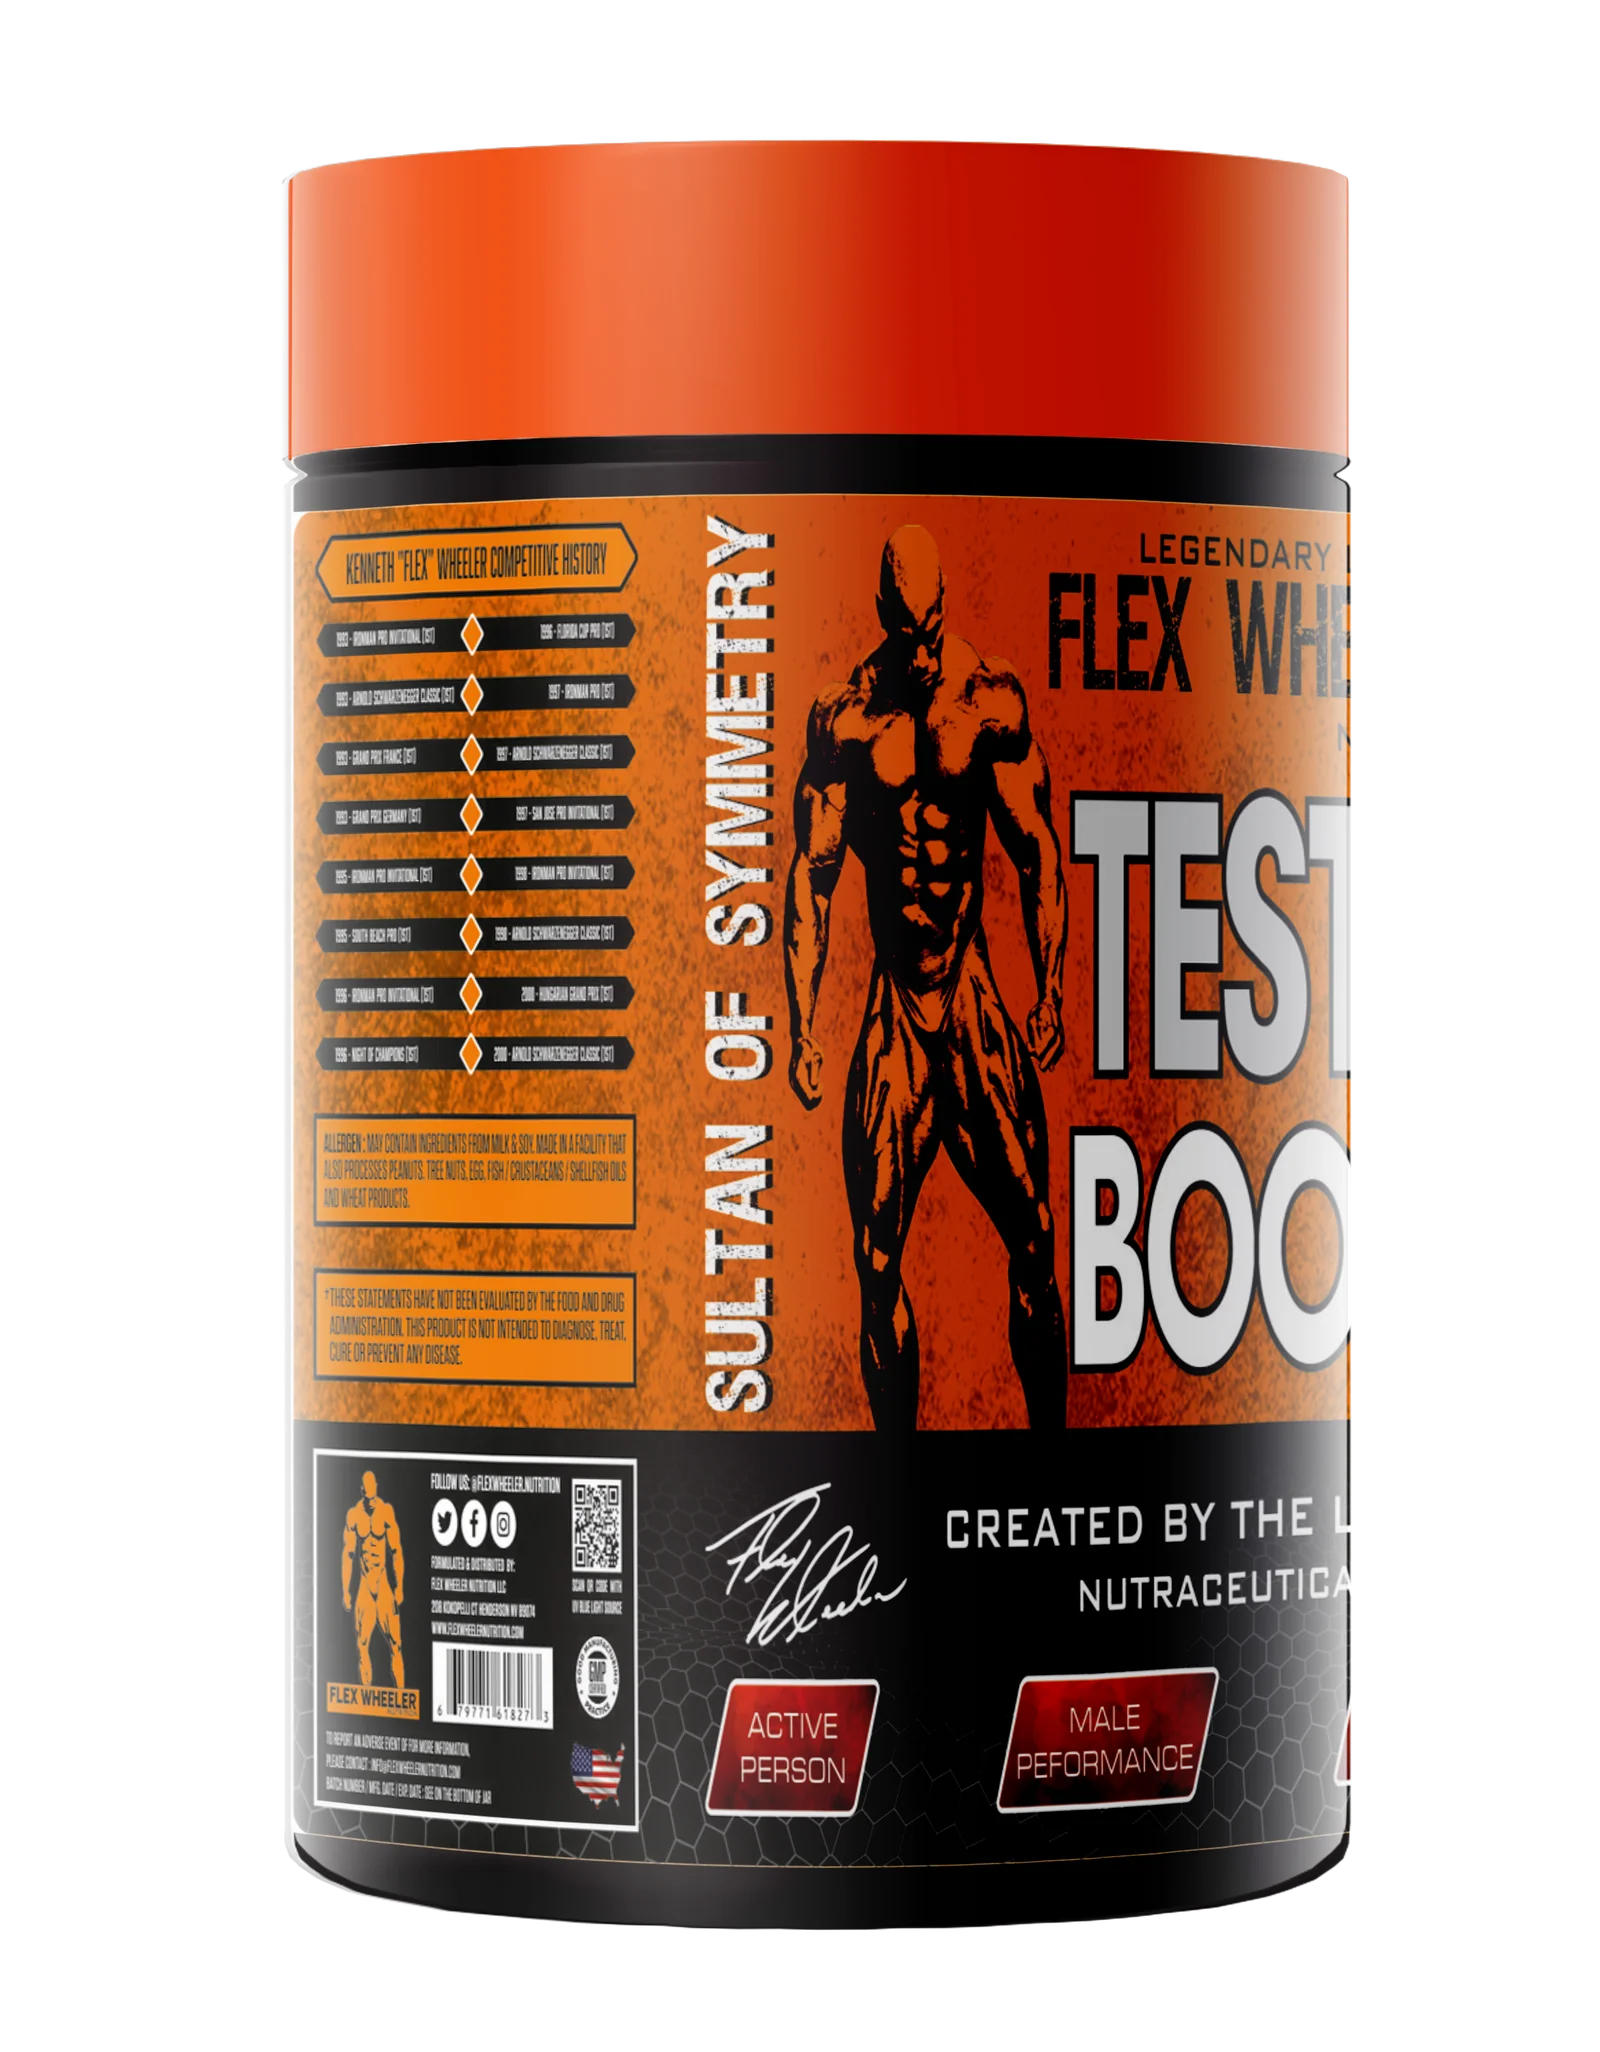 Flex Wheeler Legendary Testo Boost Testosterone Booster For Men - 90 Capsules